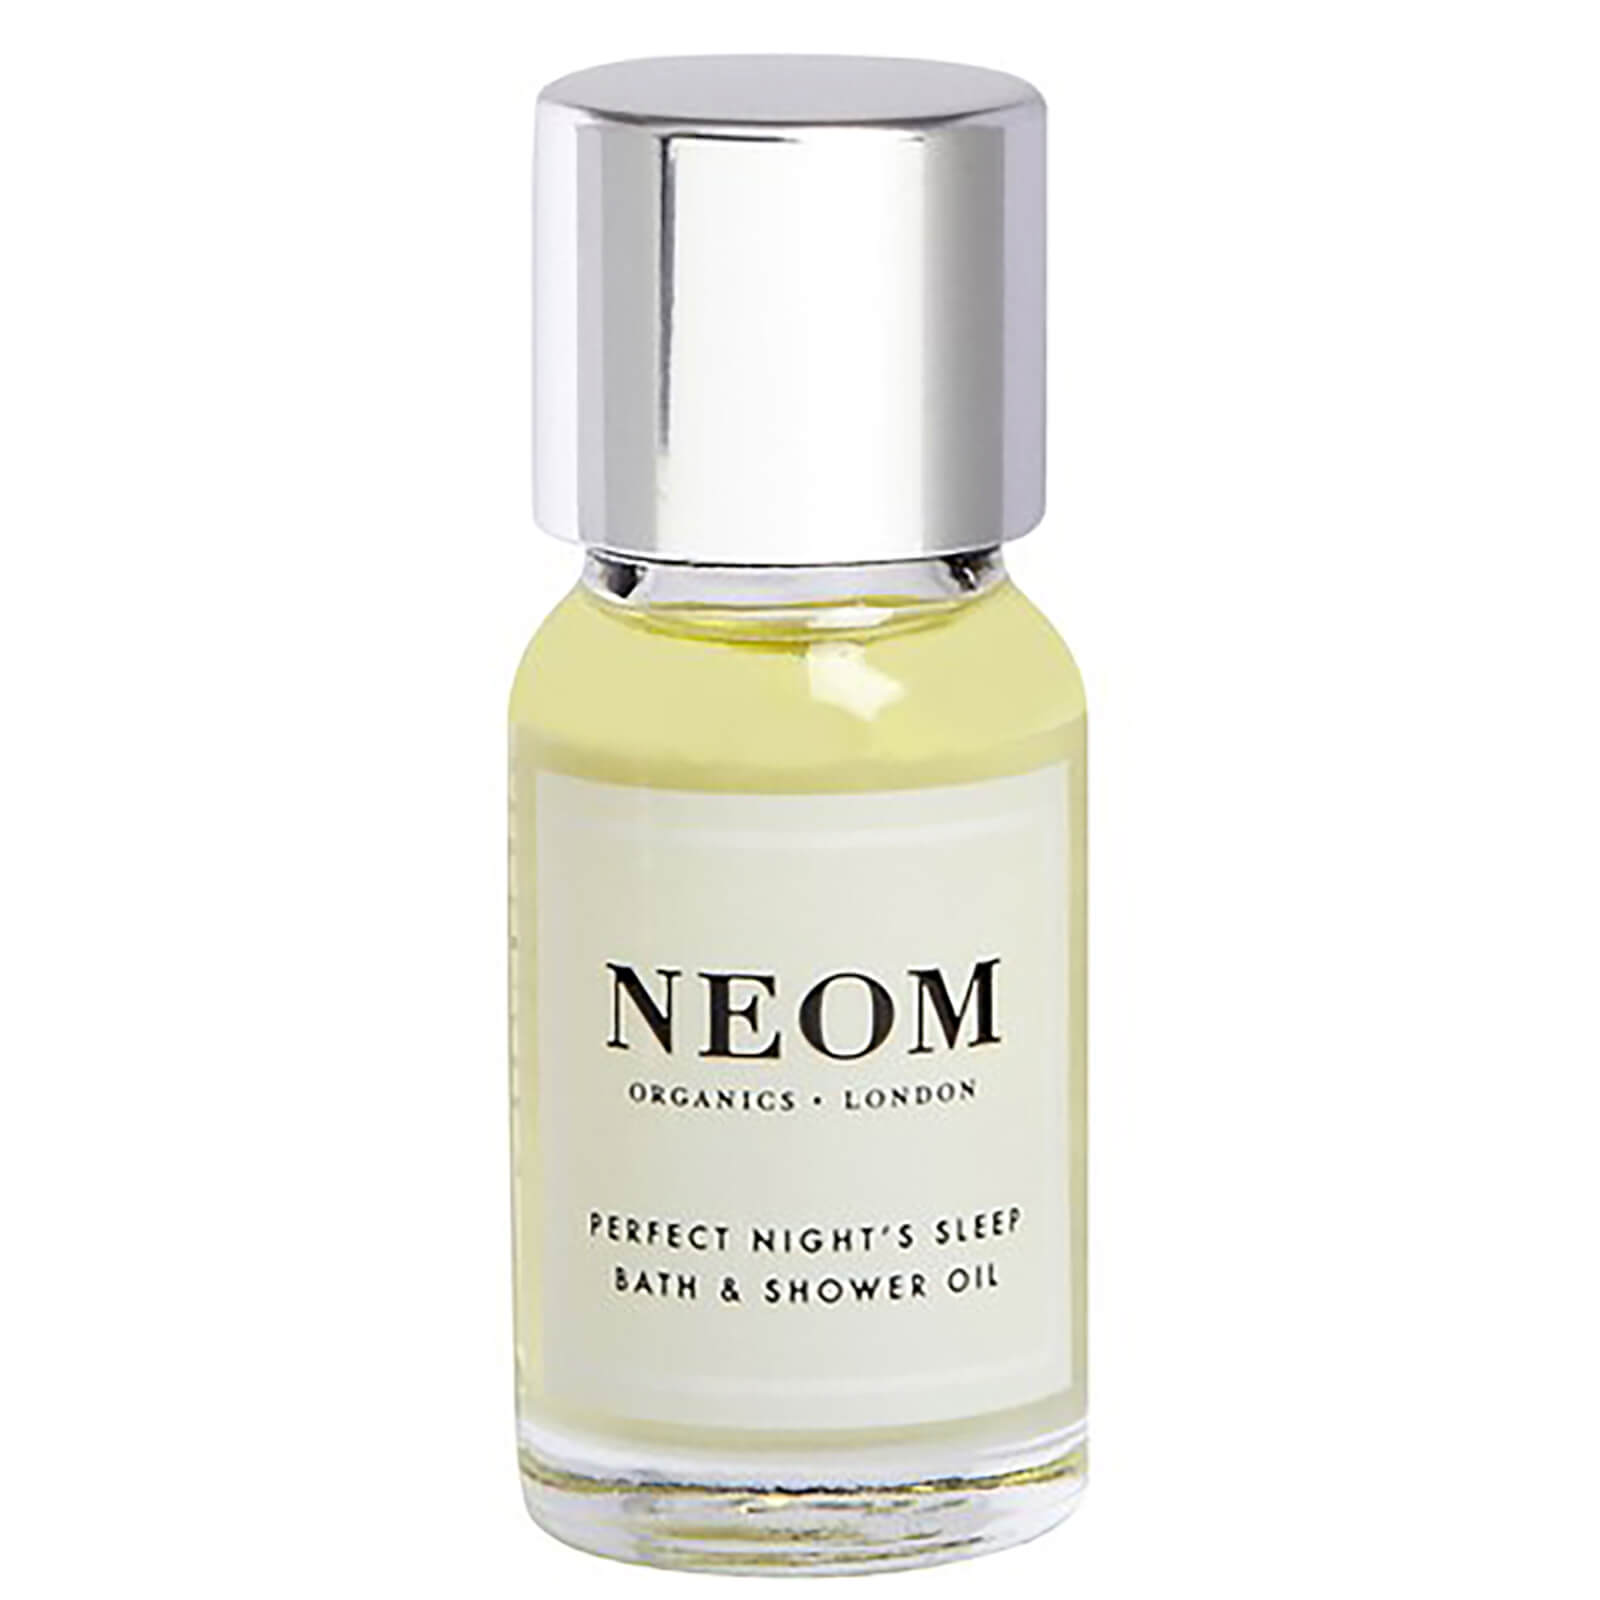 Perfect Night's Sleep Bath & Shower Oil de Neom (10 ml)